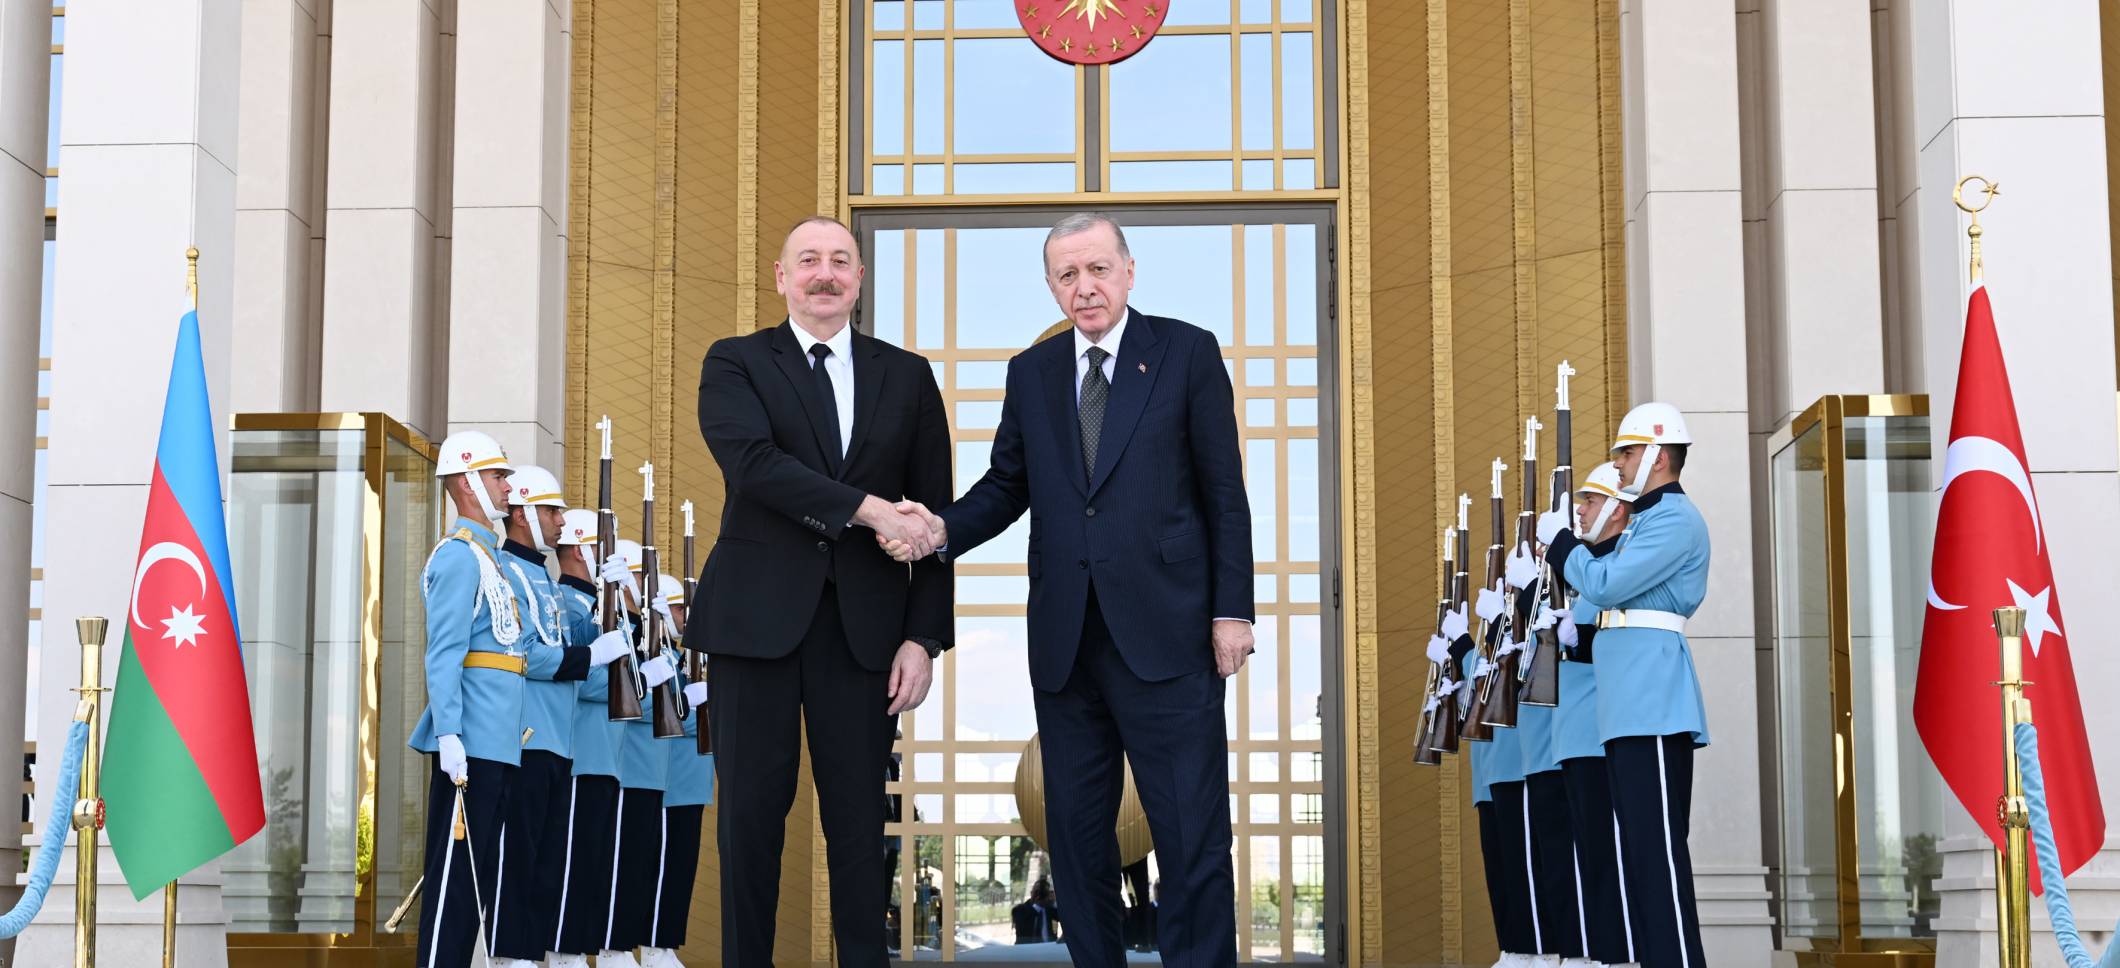 Ilham Aliyev held one-on-one meeting with President Recep Tayyip Erdogan in Ankara